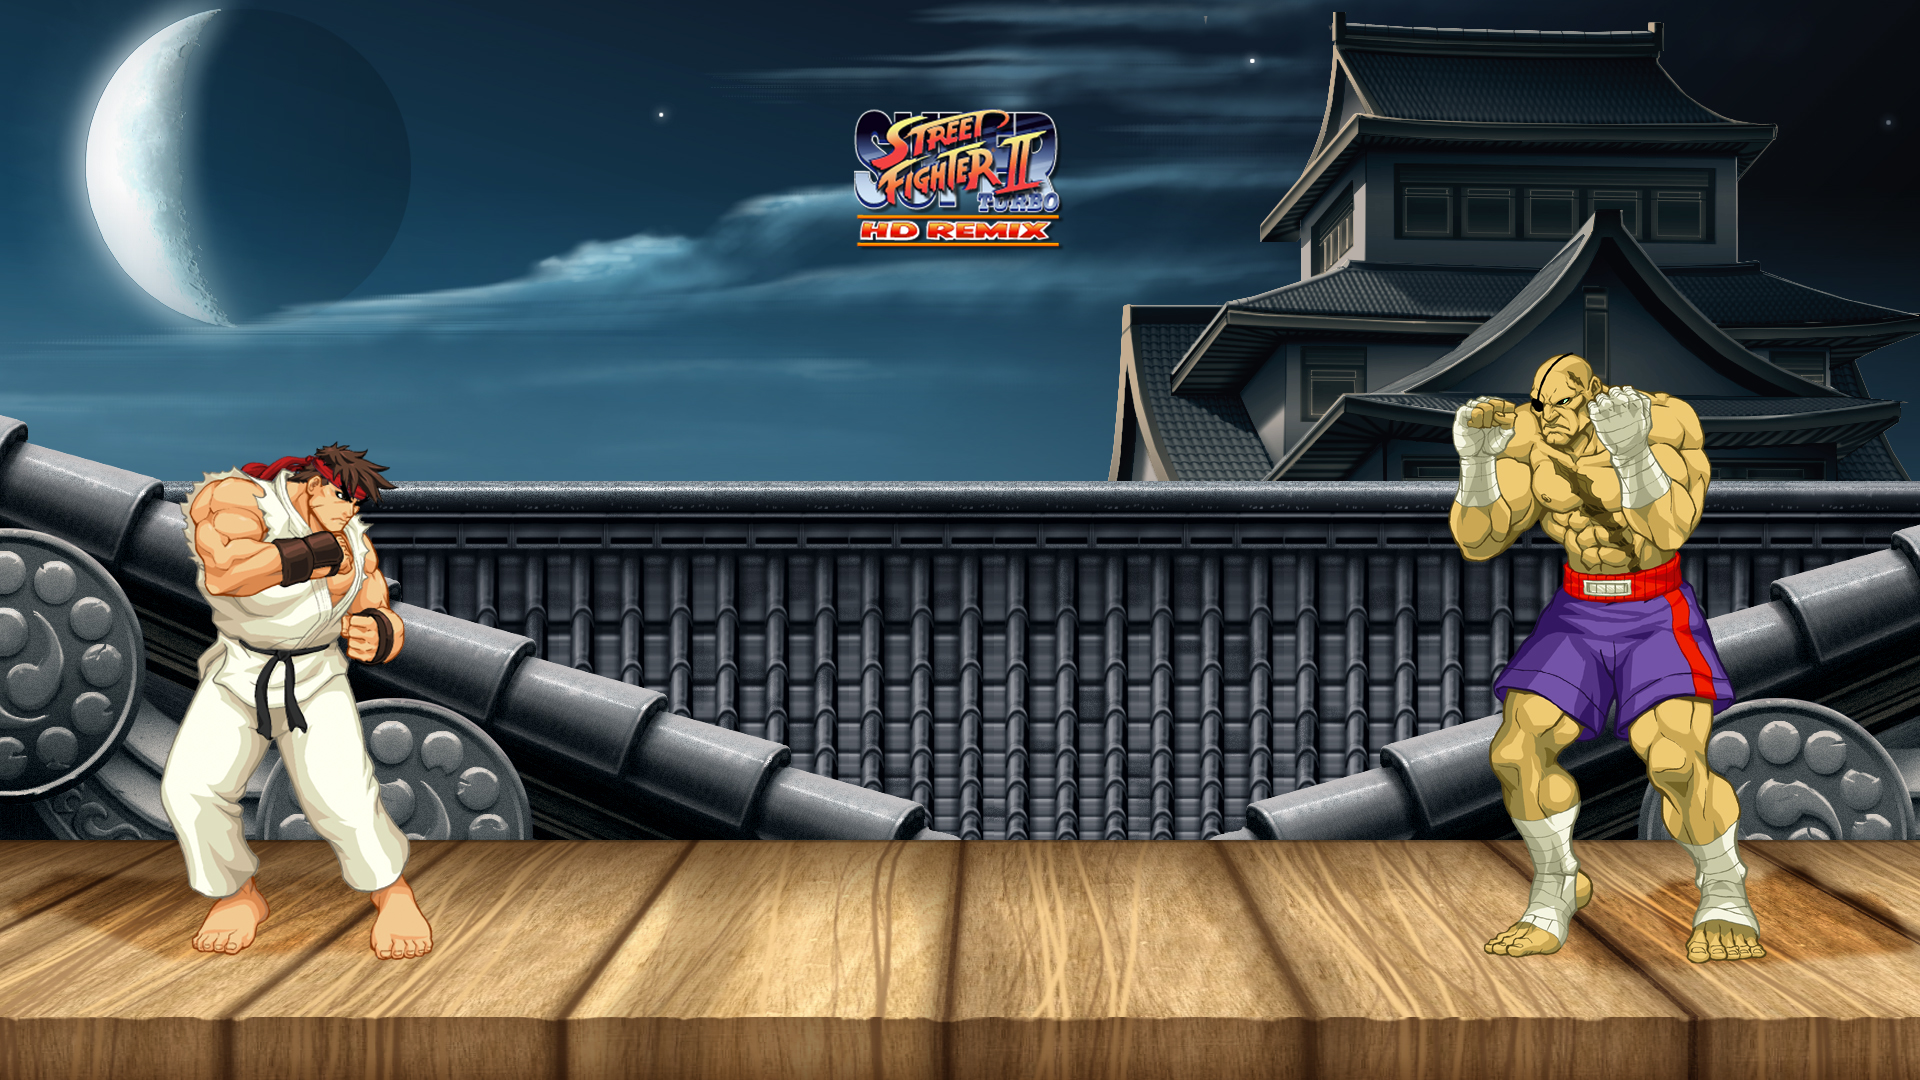 Video Game Street Fighter HD Wallpaper